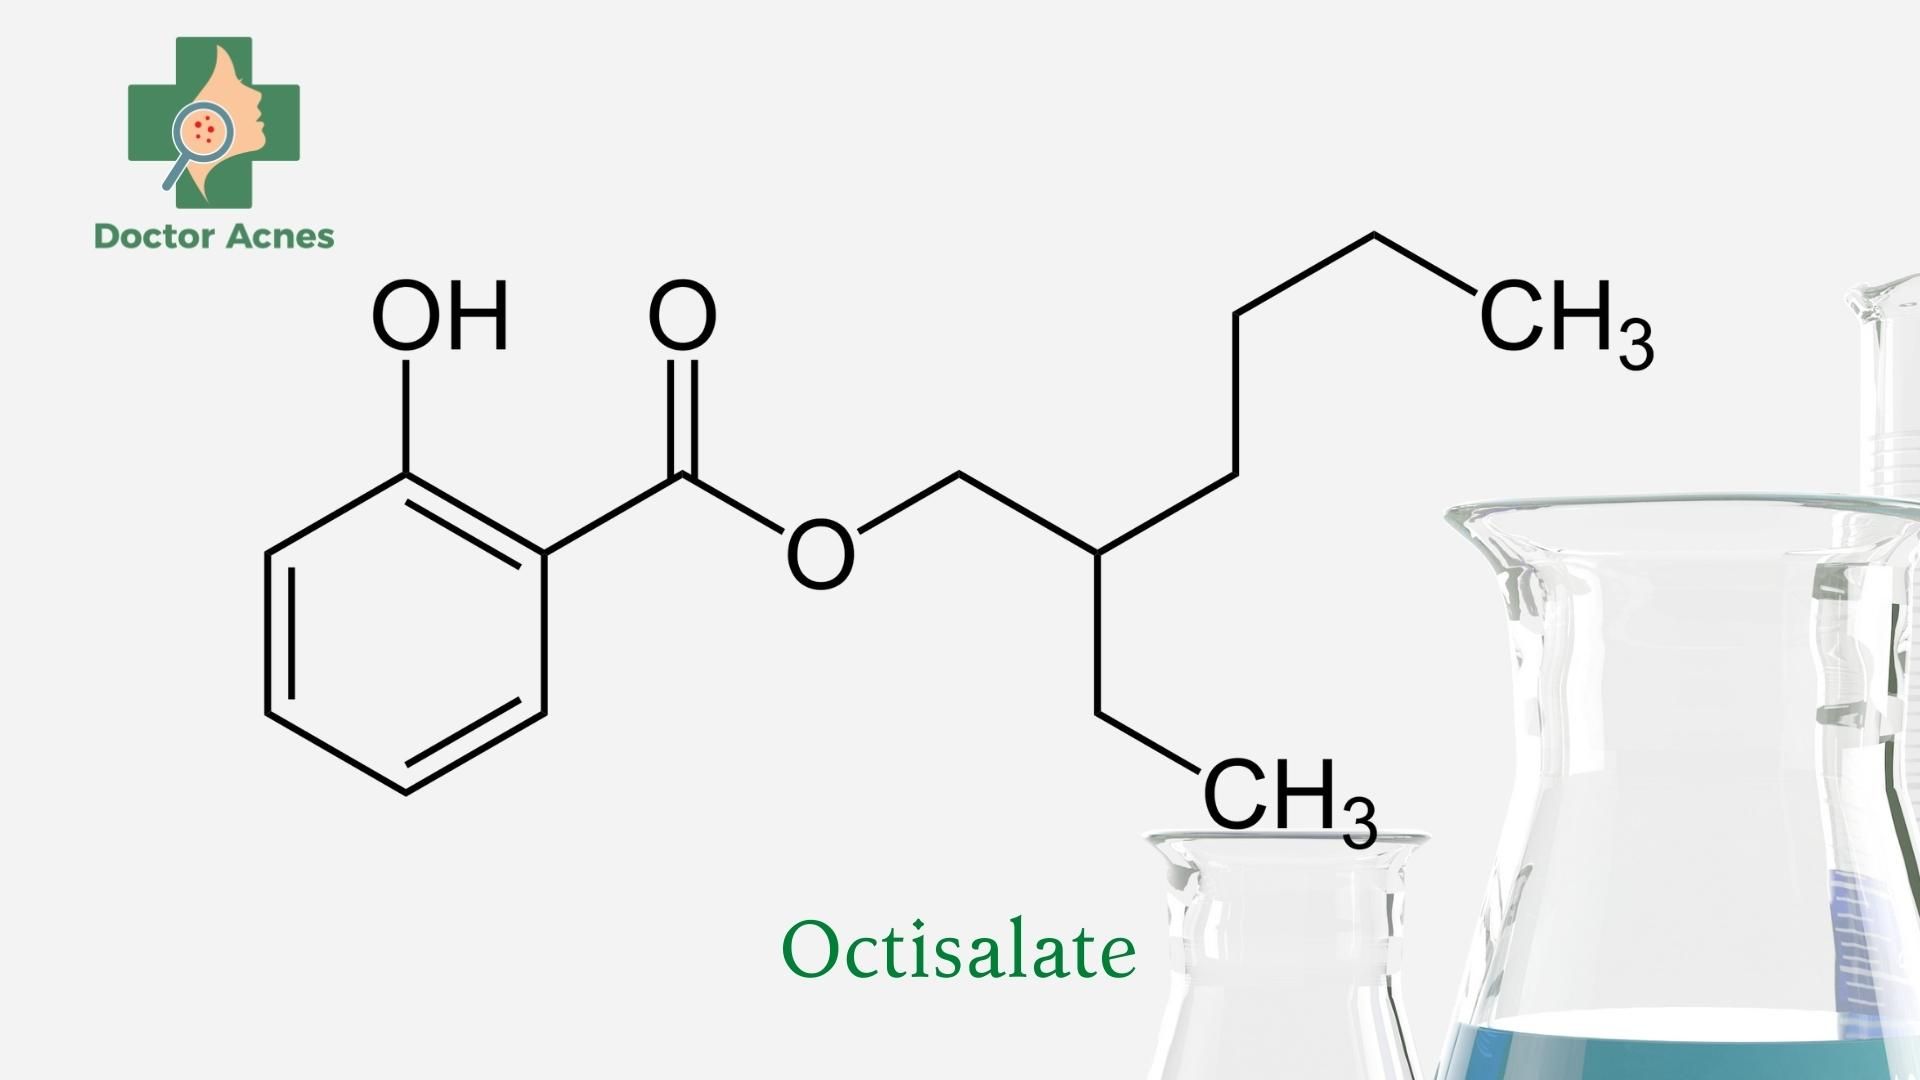 Octisalate - Doctor Acnes